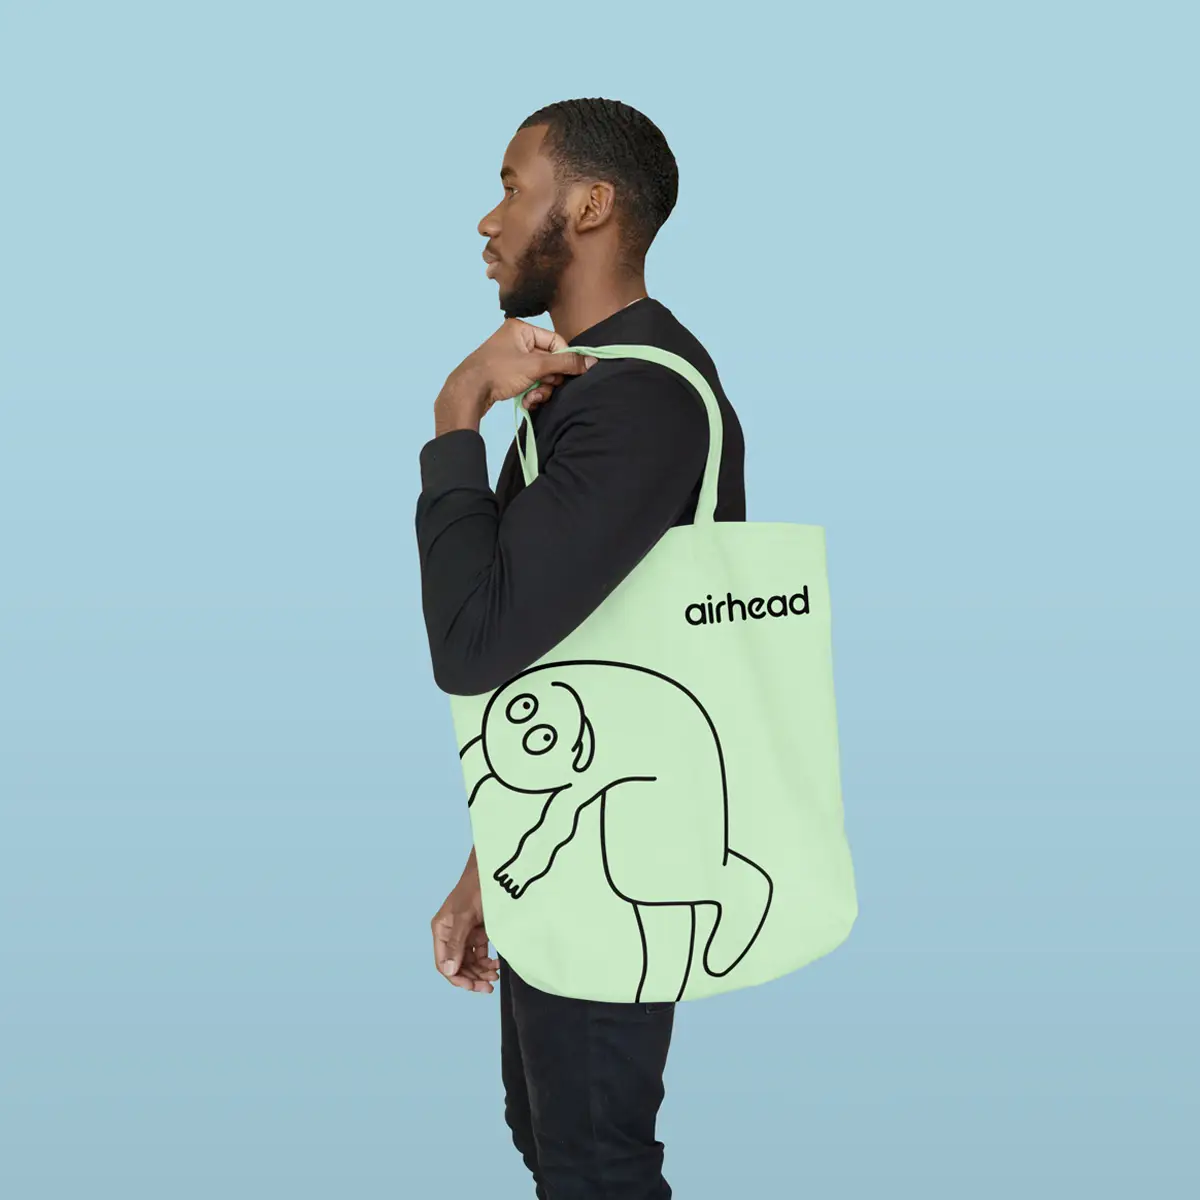 Airhead tote bag